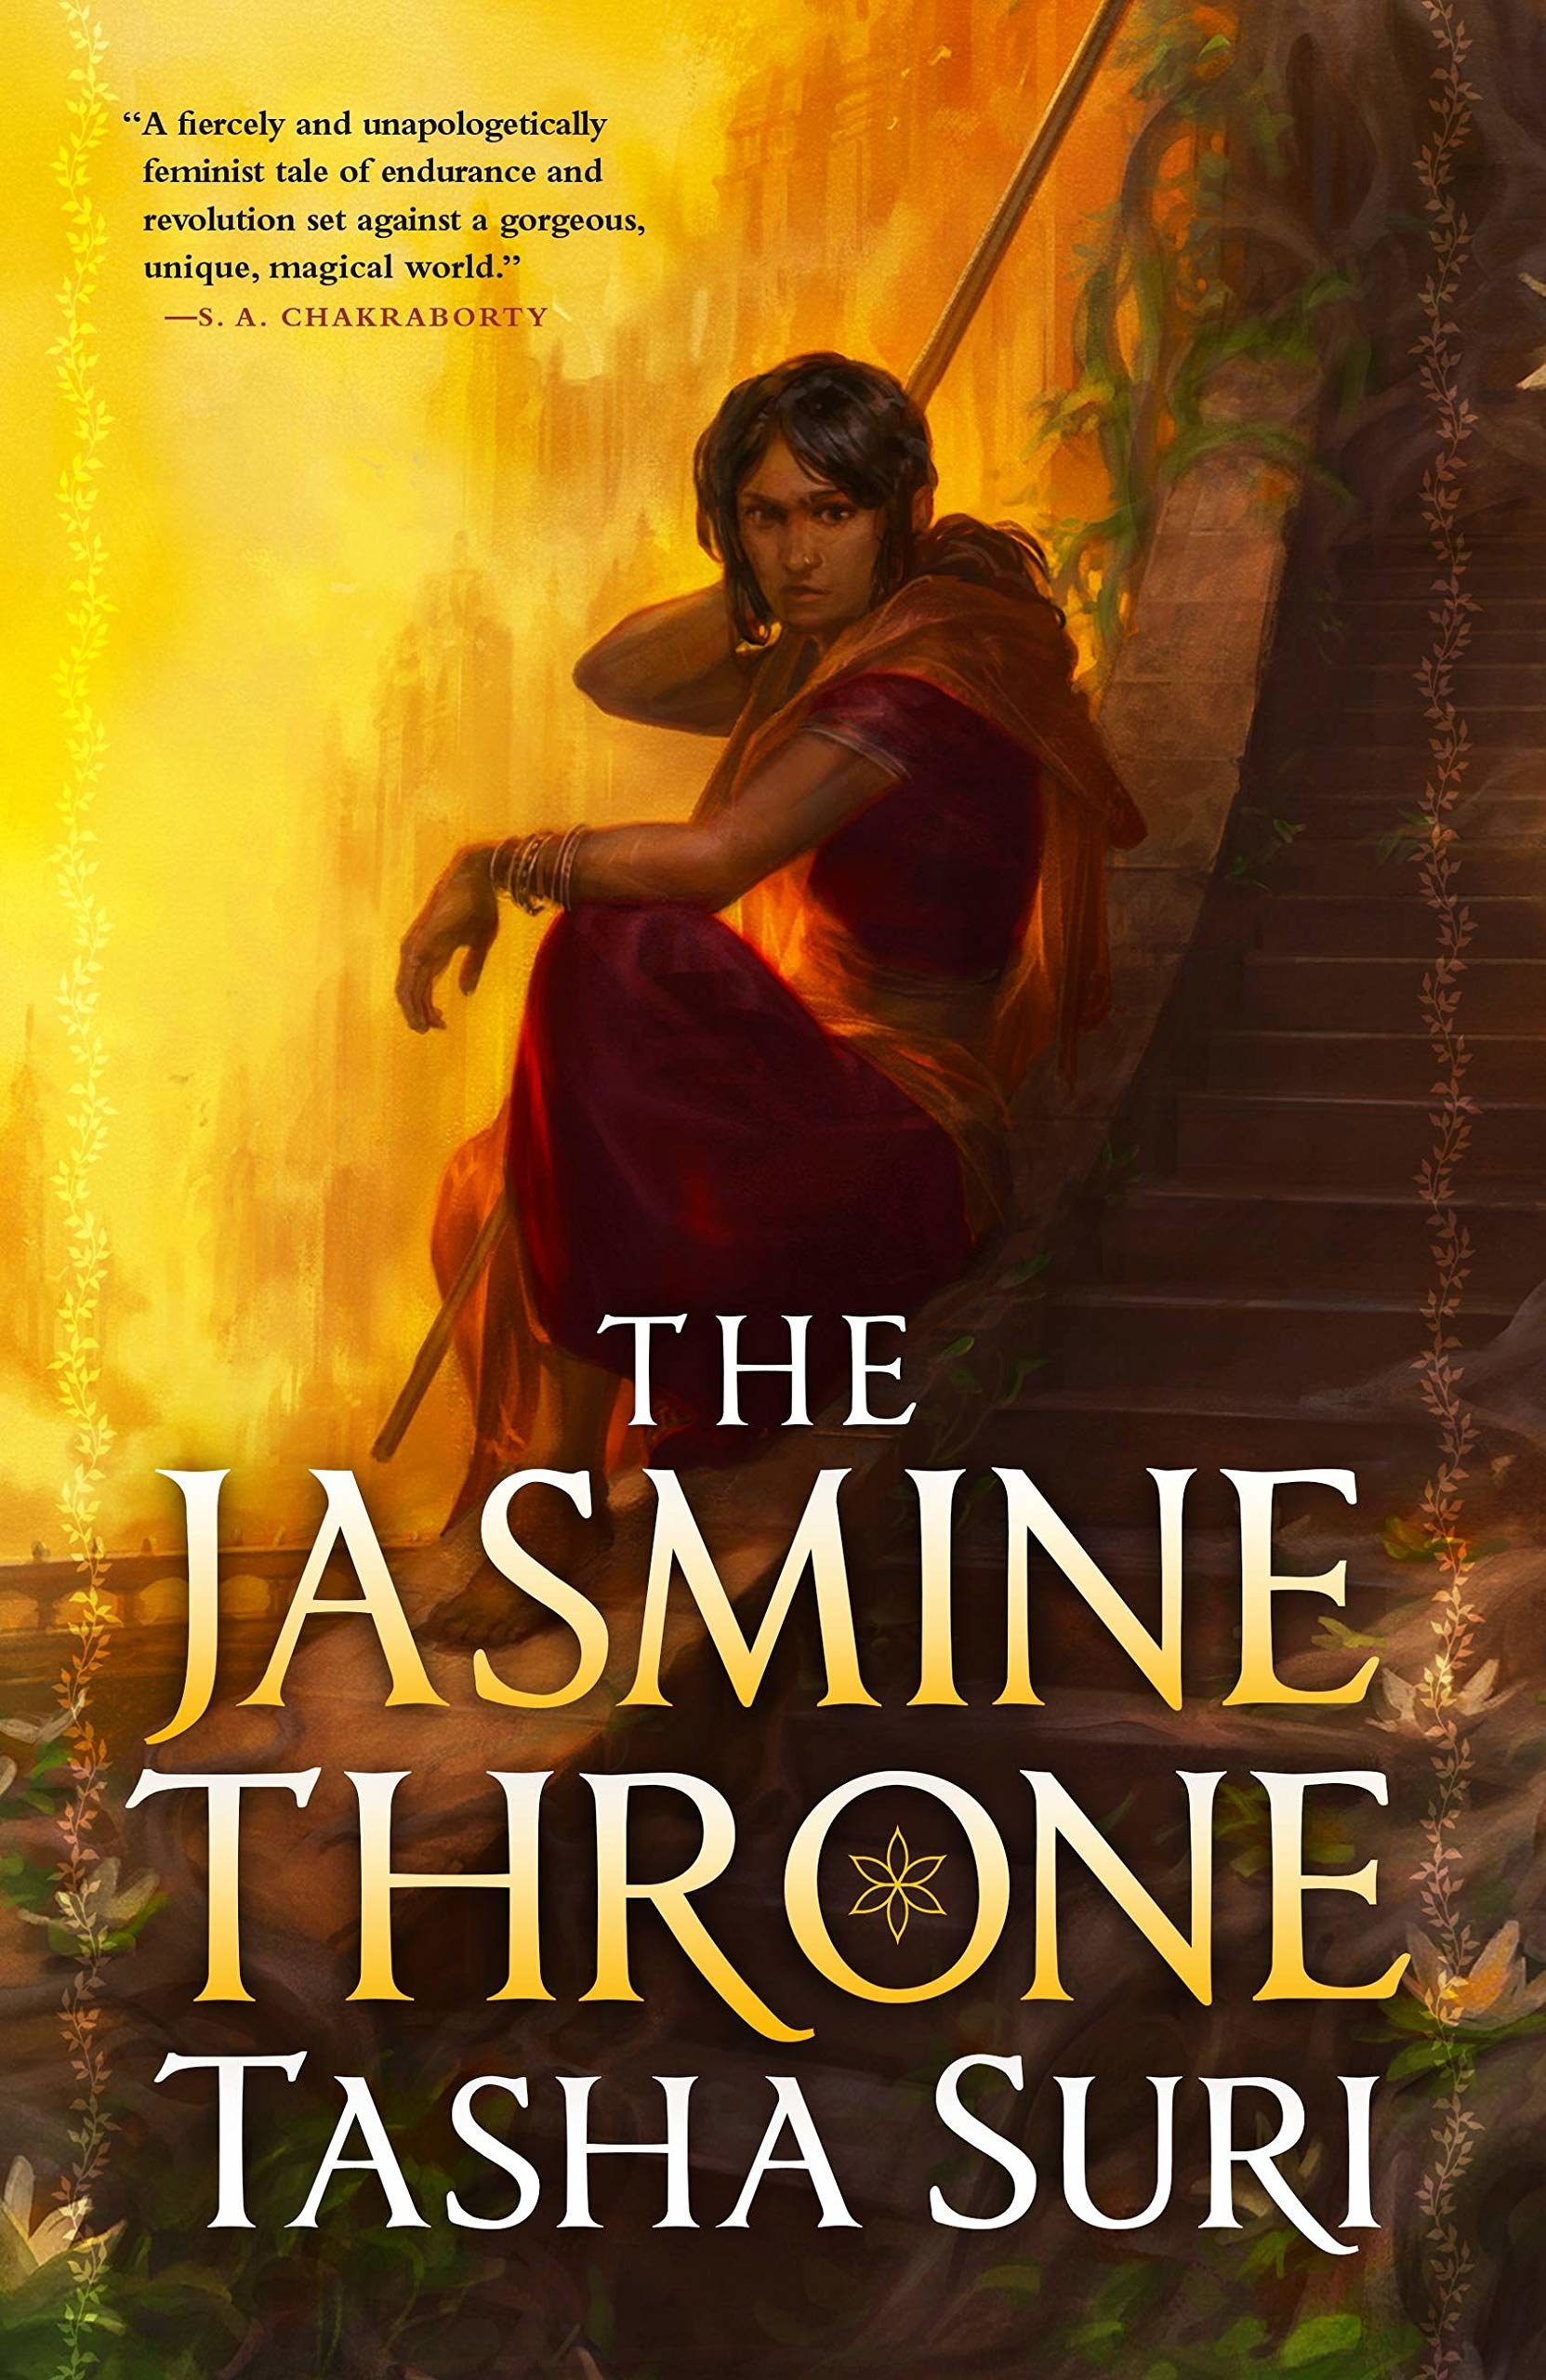 The Jasmine Throne book cover. Book by Tasha Suri.